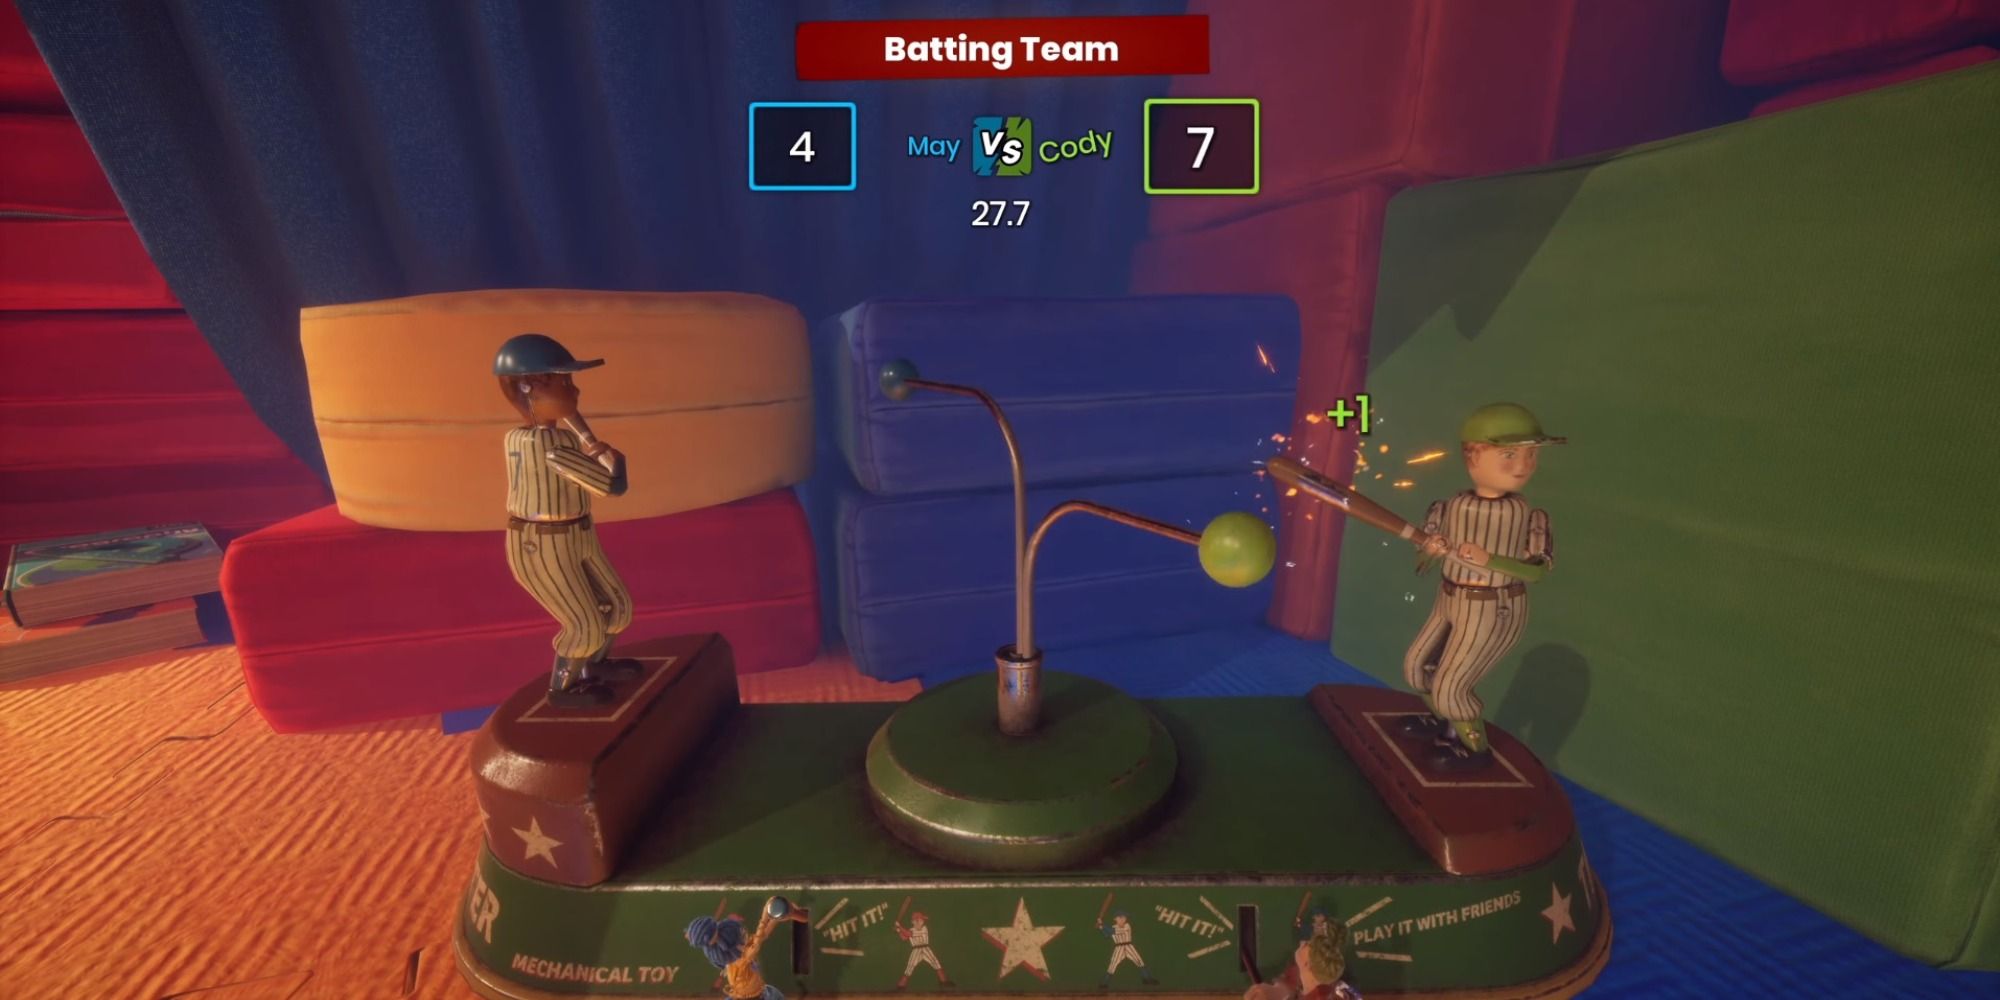 It Takes Two Batting Team batting toy, score of 4-7